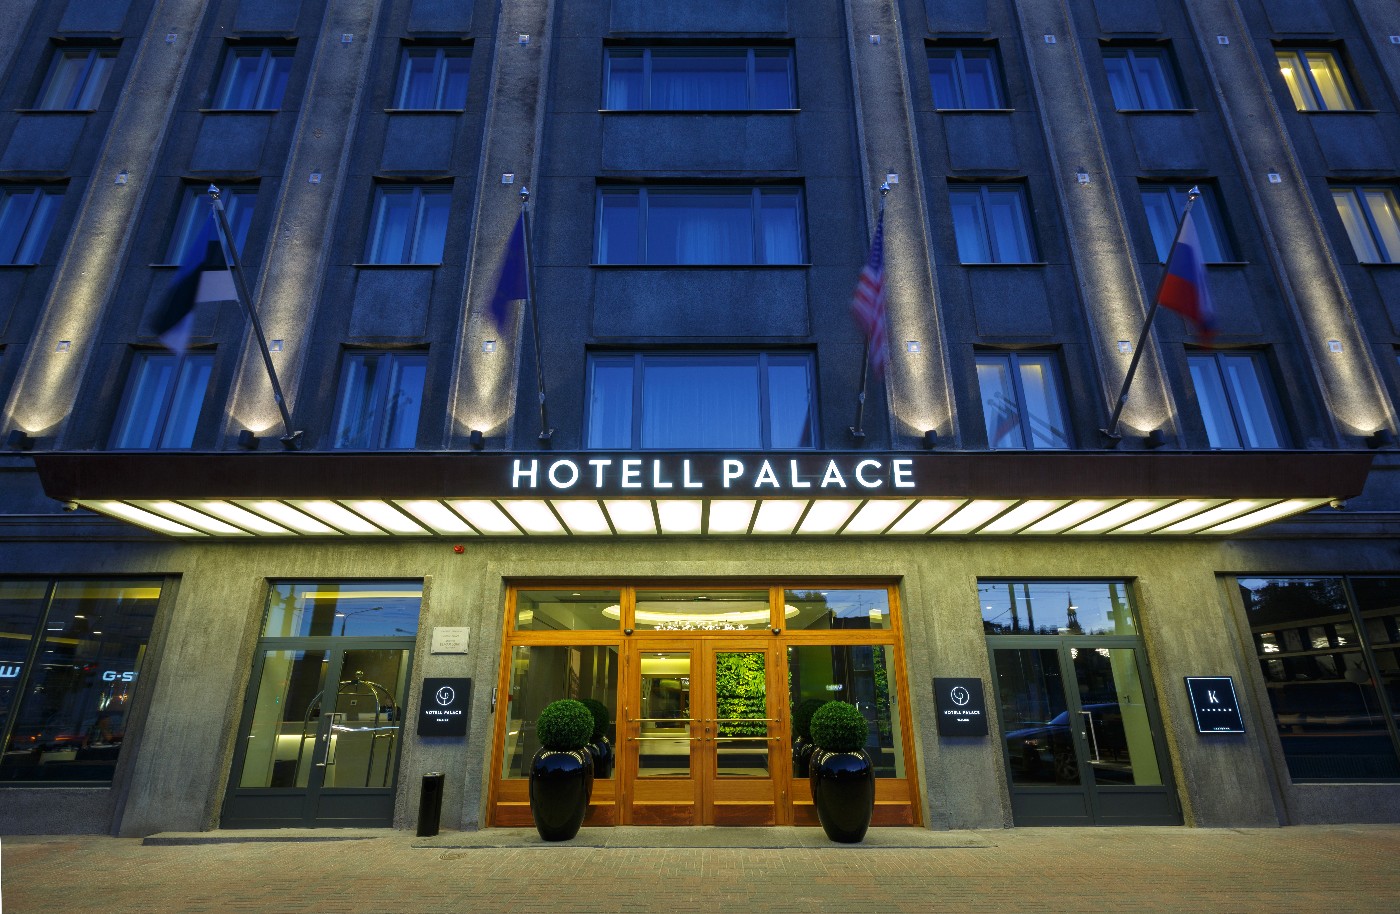 Hotell Palace: 19 000 туристов за 2015 год